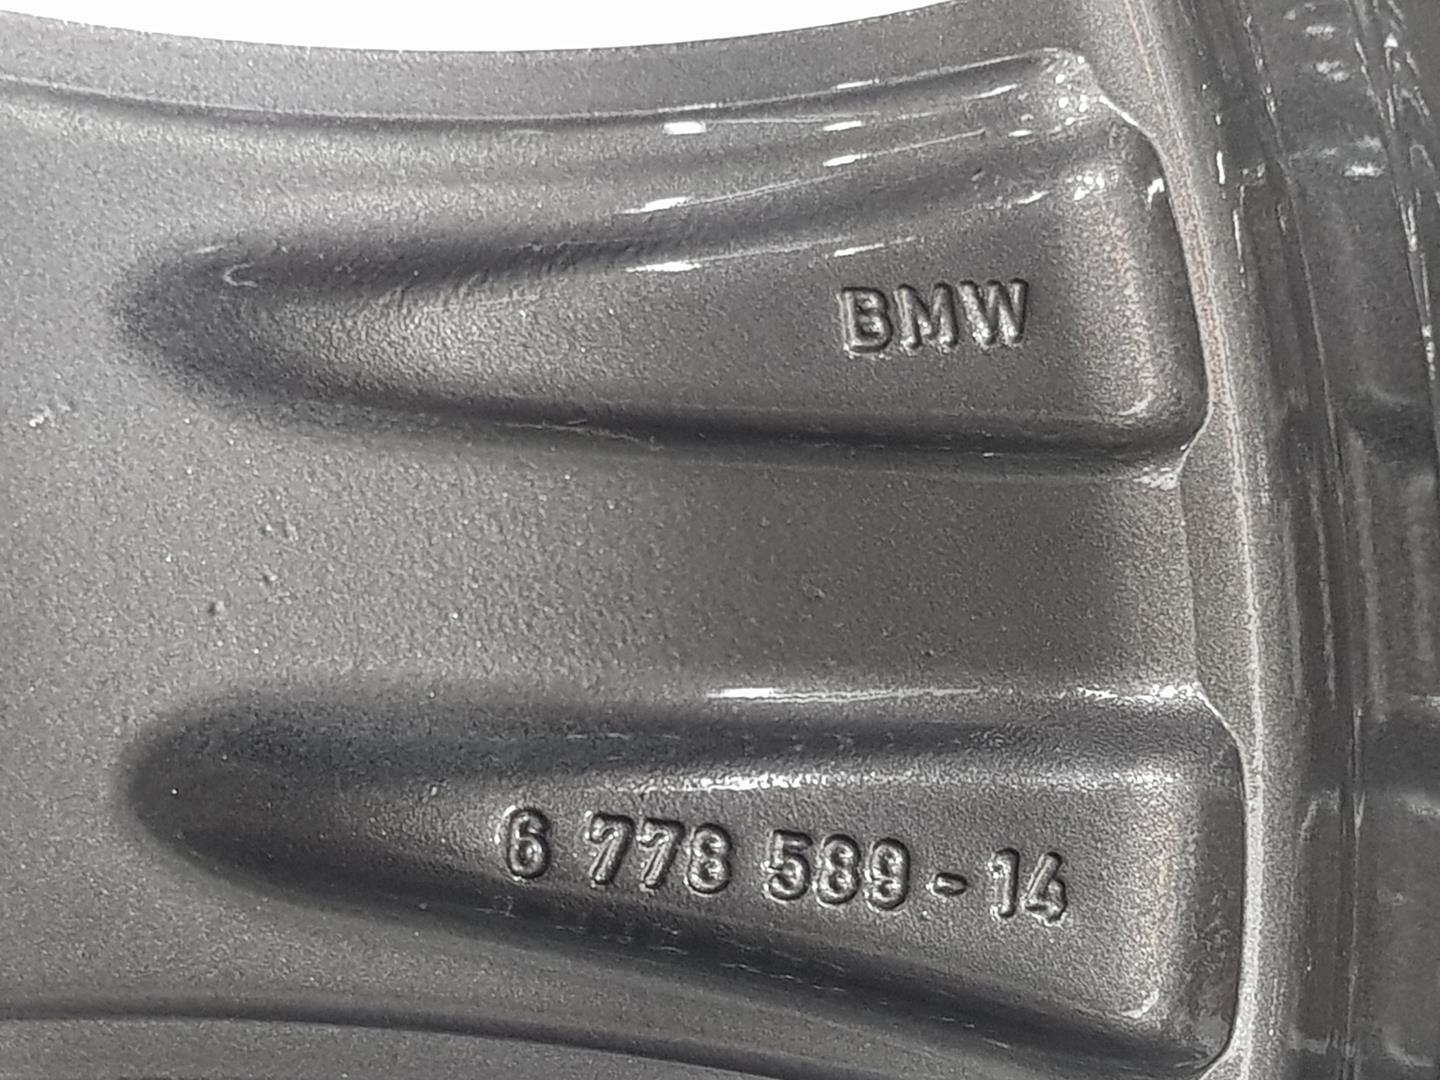 BMW X6 E71/E72 (2008-2012) Wheel 6778589, 11JX20H2, 20PULGADAS 25279719